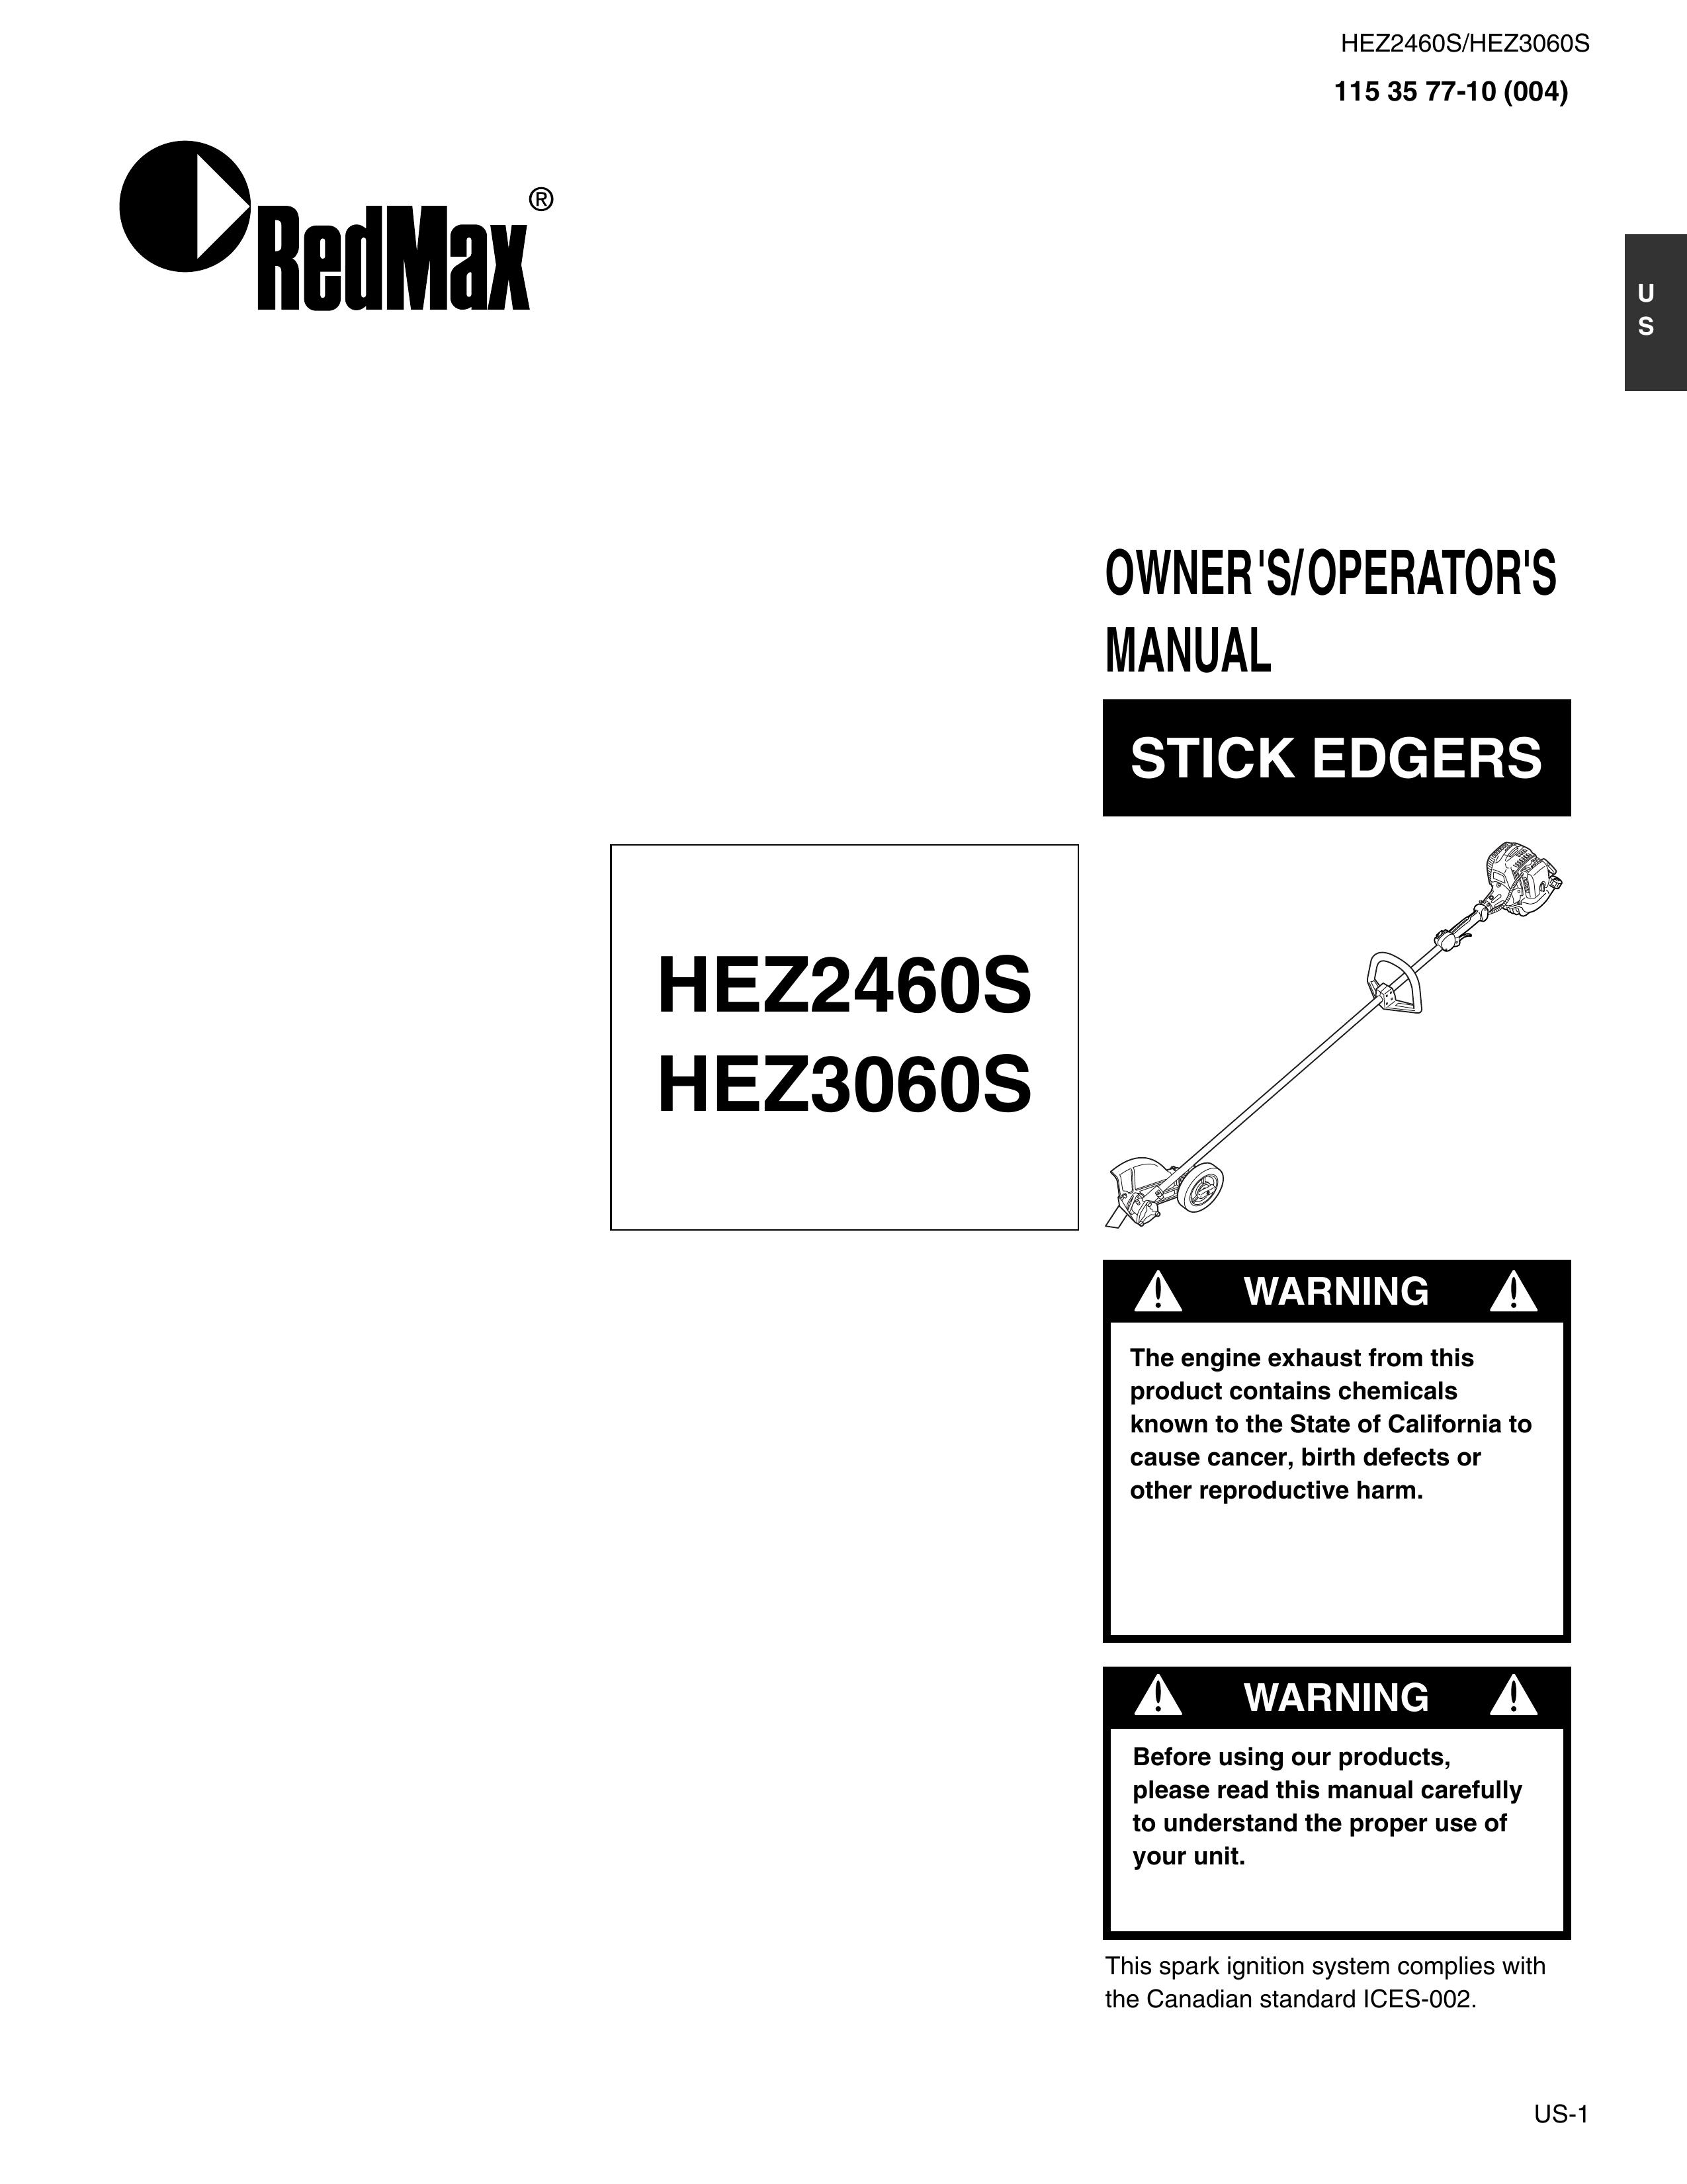 RedMax HEZ3060S Edger User Manual